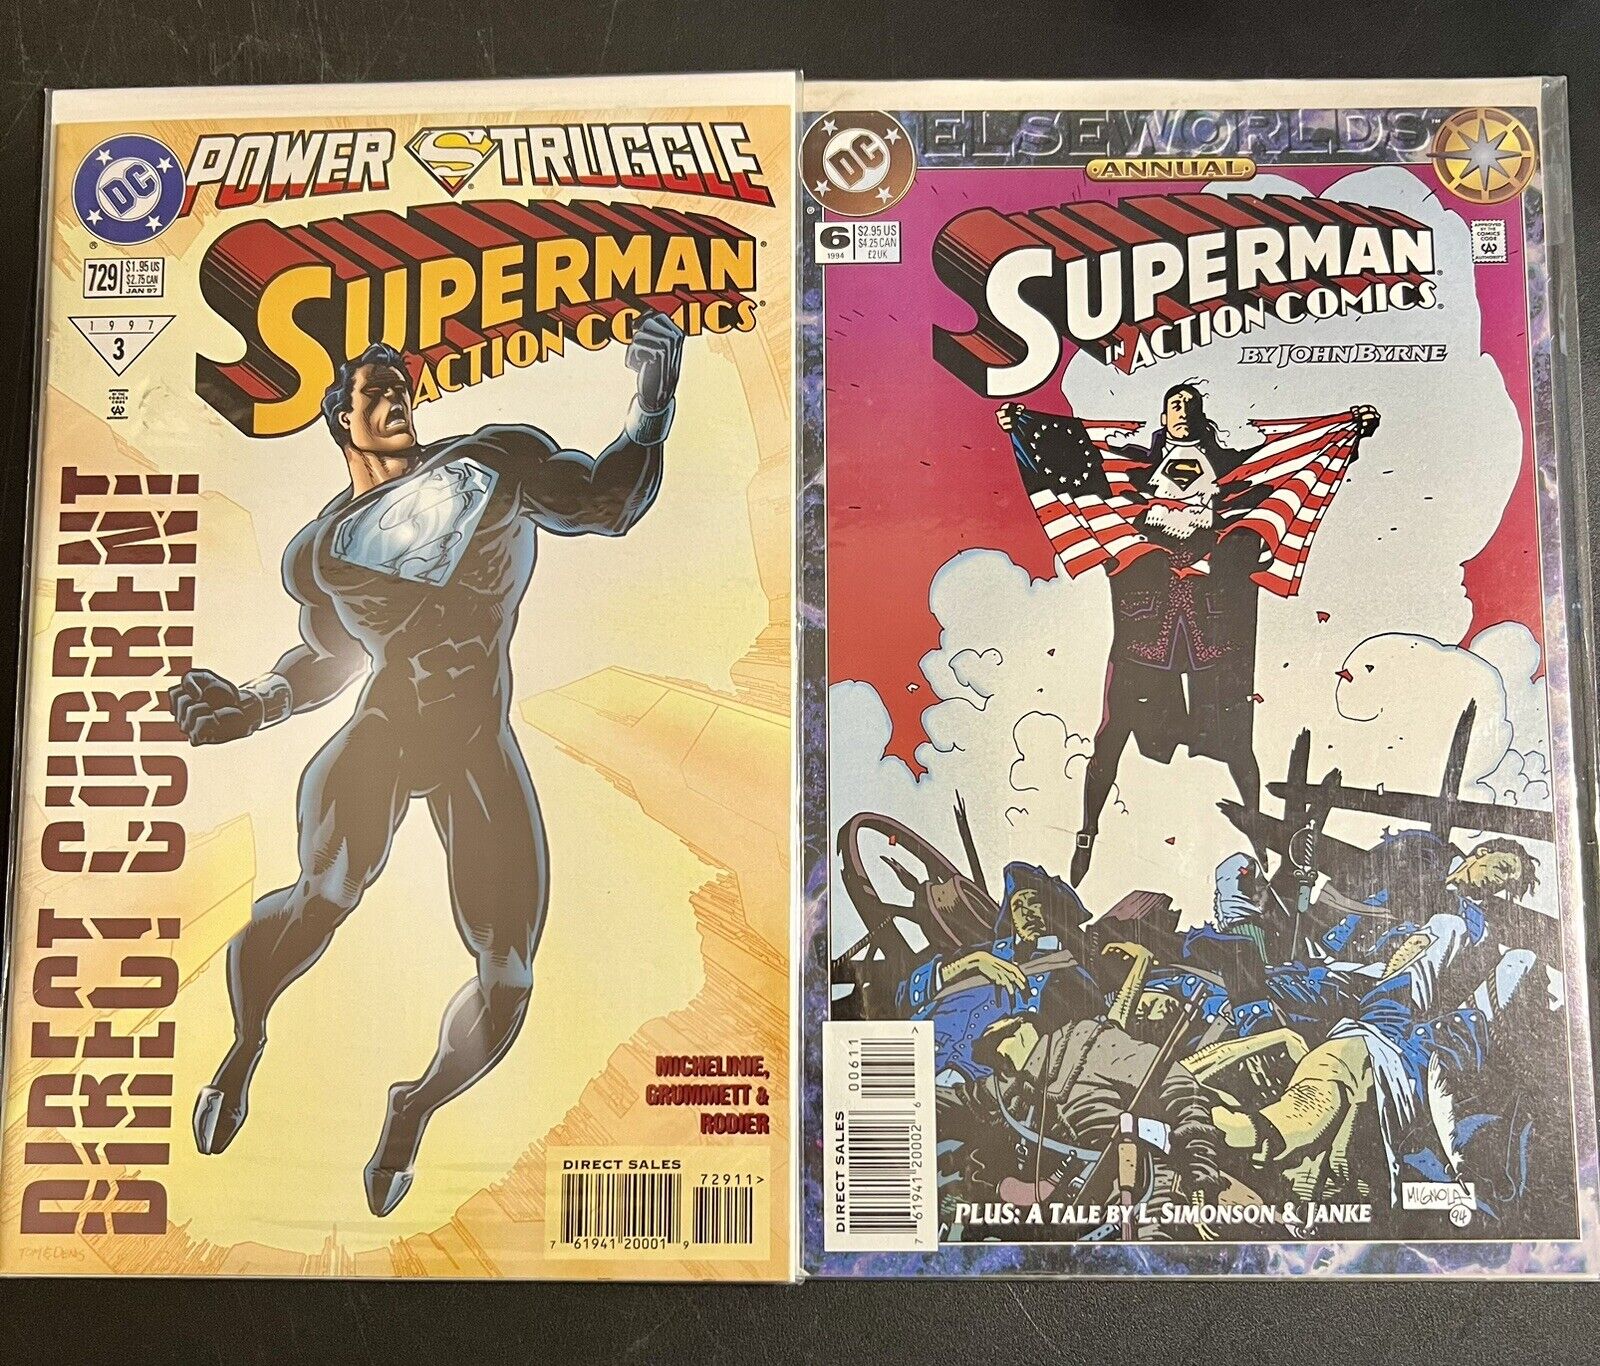 SUPERMAN~Action Comics~1994 Annual Edition~1997~Power struggle~Excellent Conditi